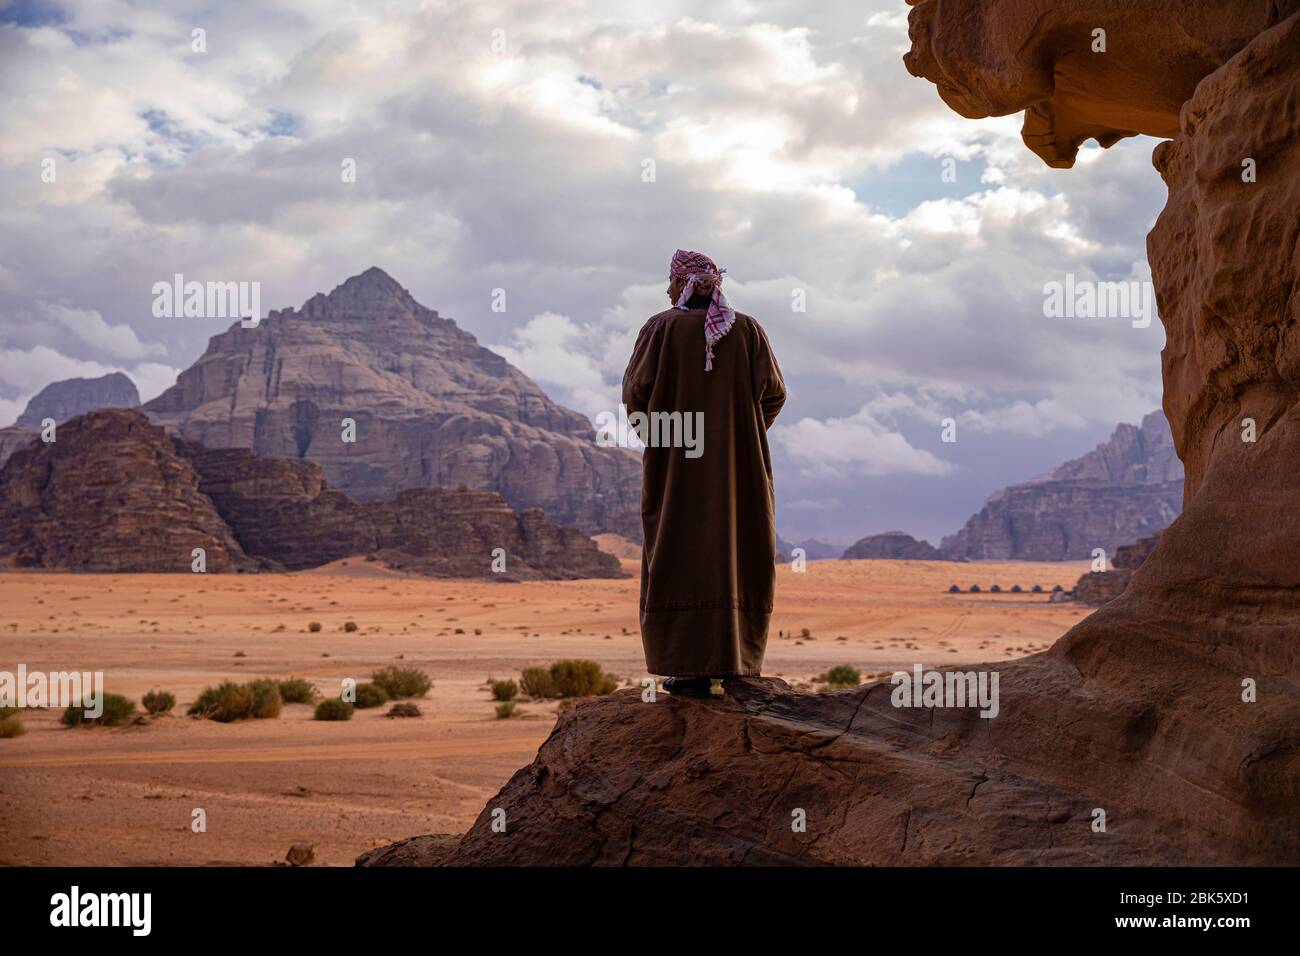 Bedouin viewing the Wadi Rum desert landscape, Jordan Stock Photo